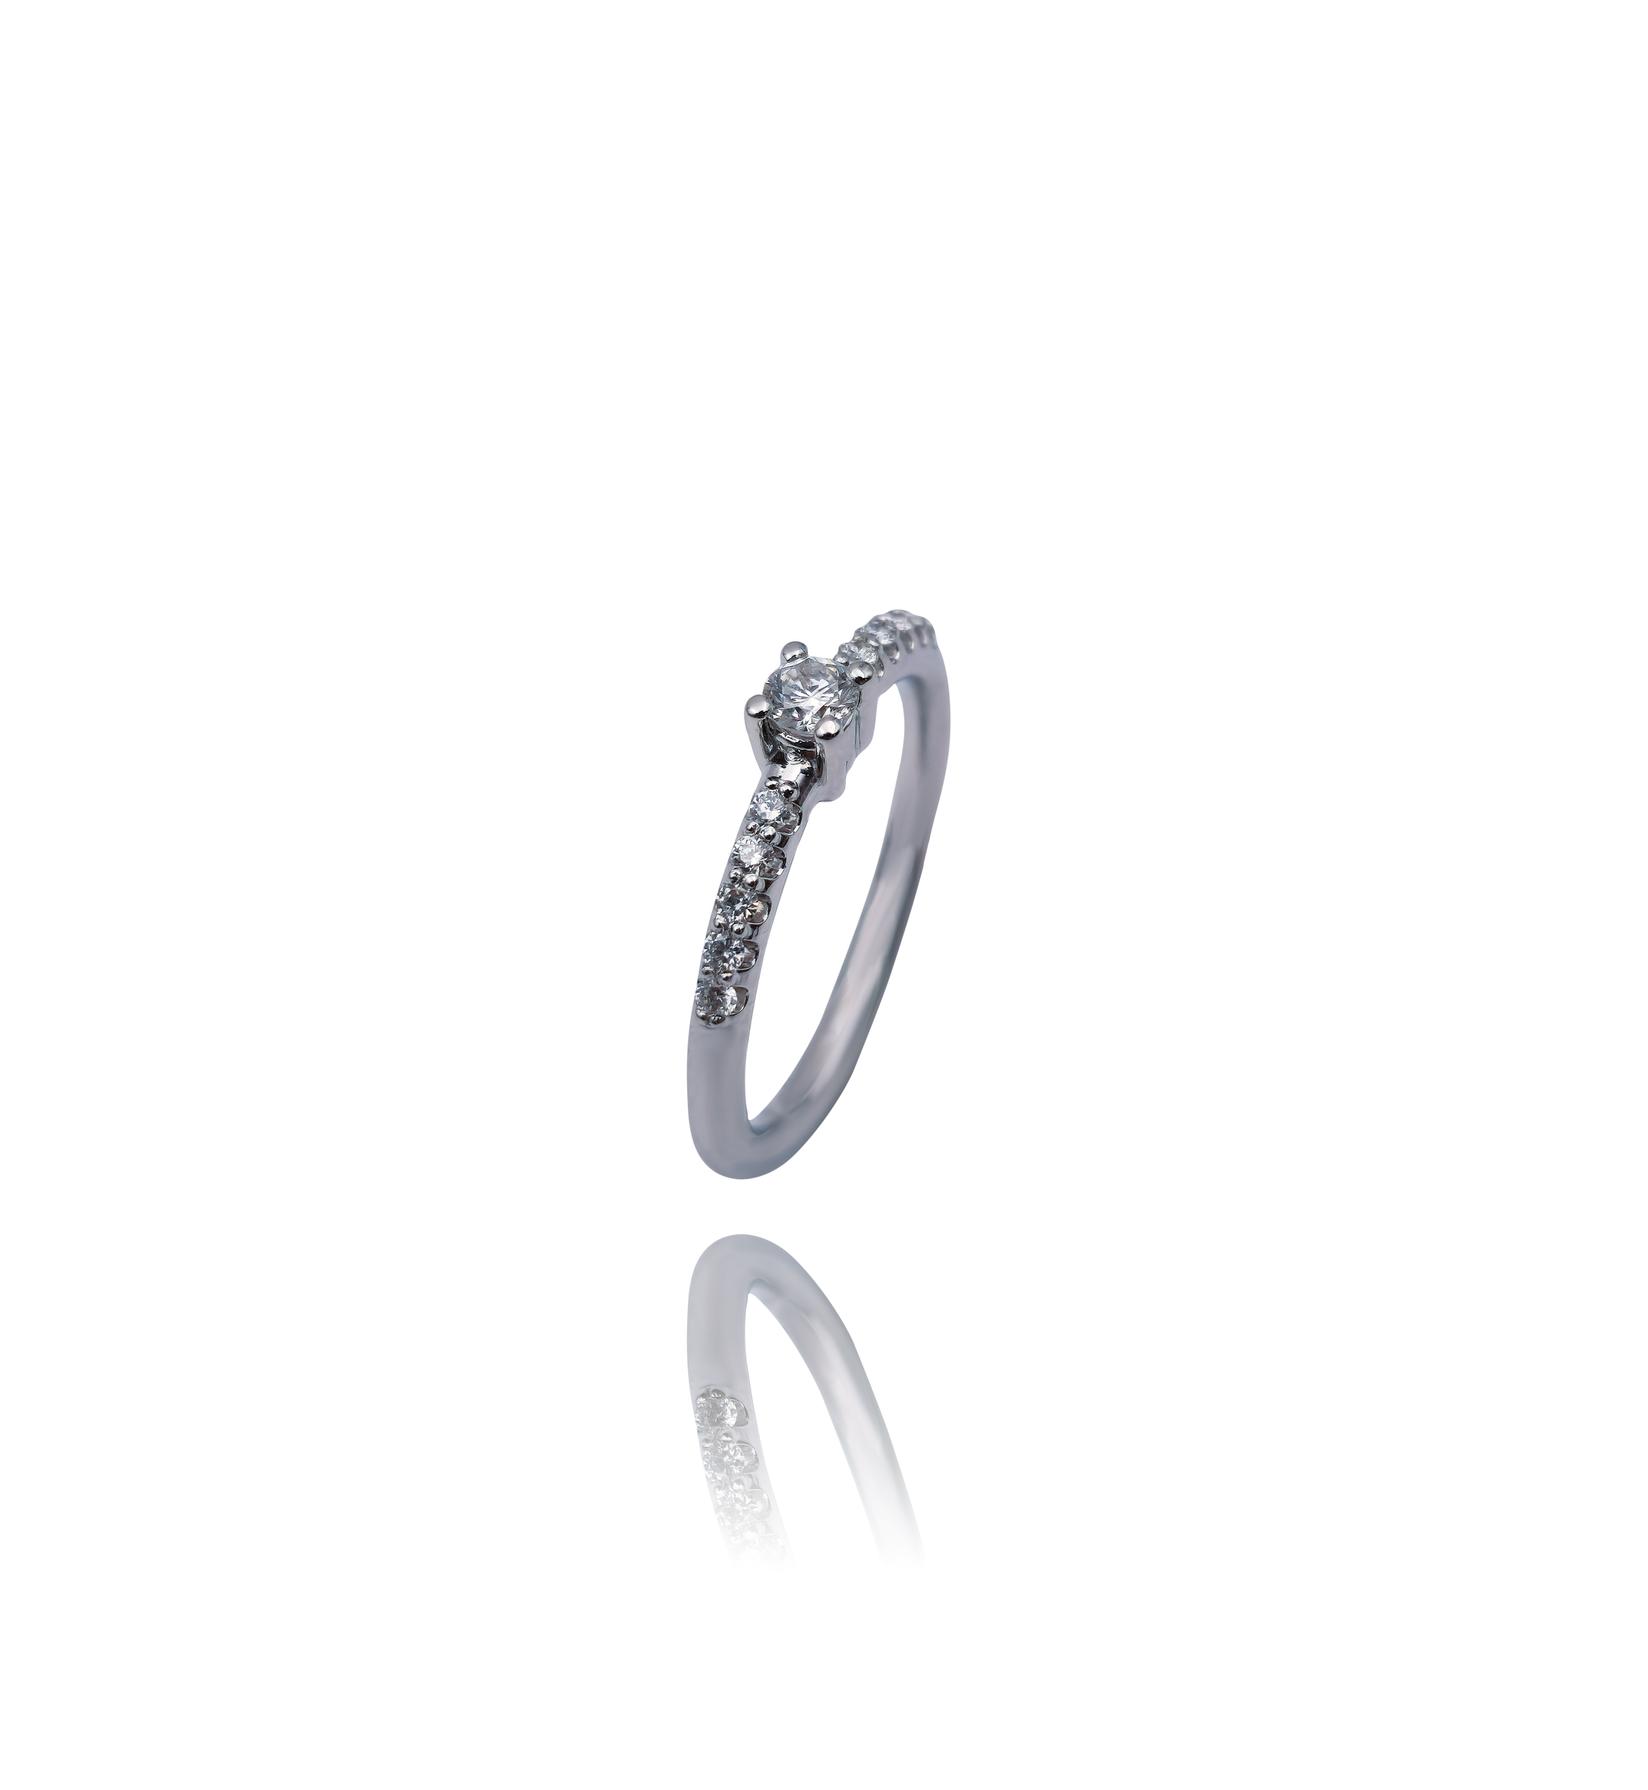 Selected image for Ženski prsten od Belog zlata sa Brilijantima, 585, 21mm